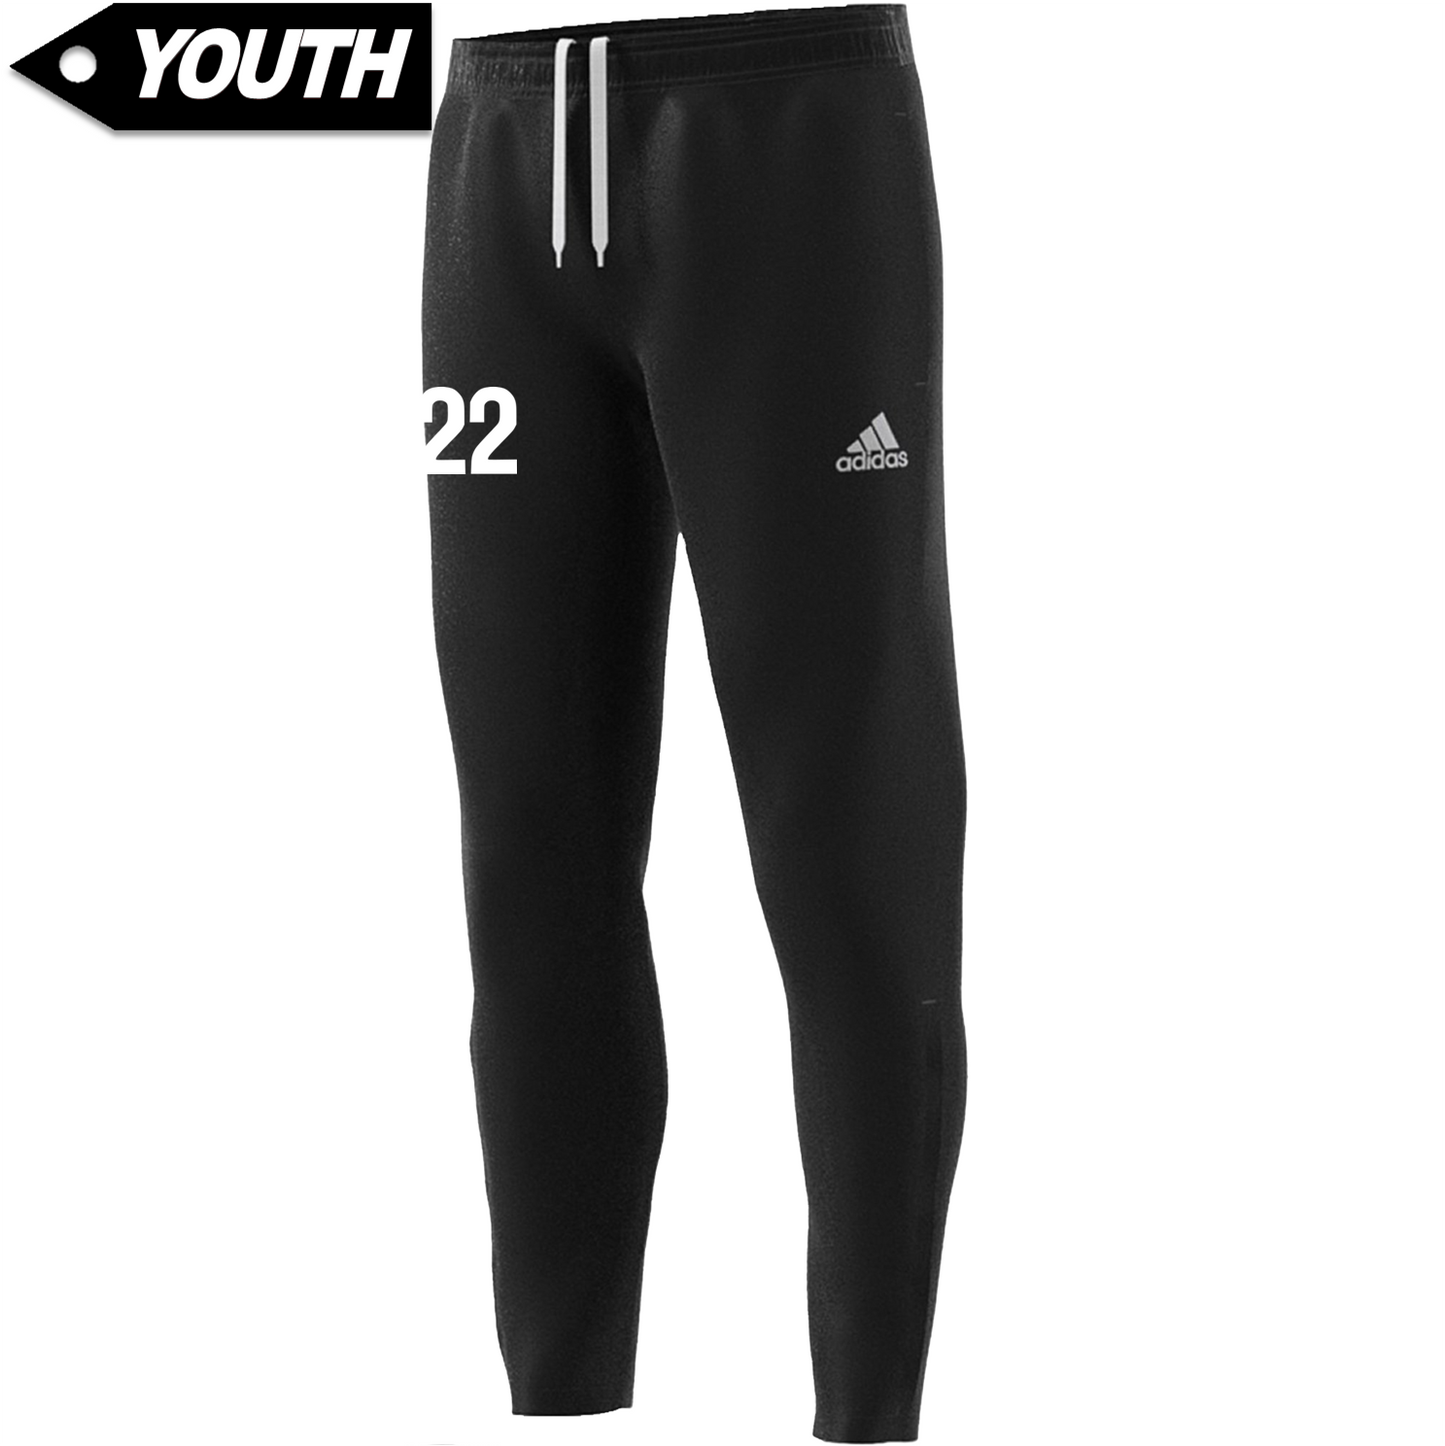 Capital FC Pant [Youth]